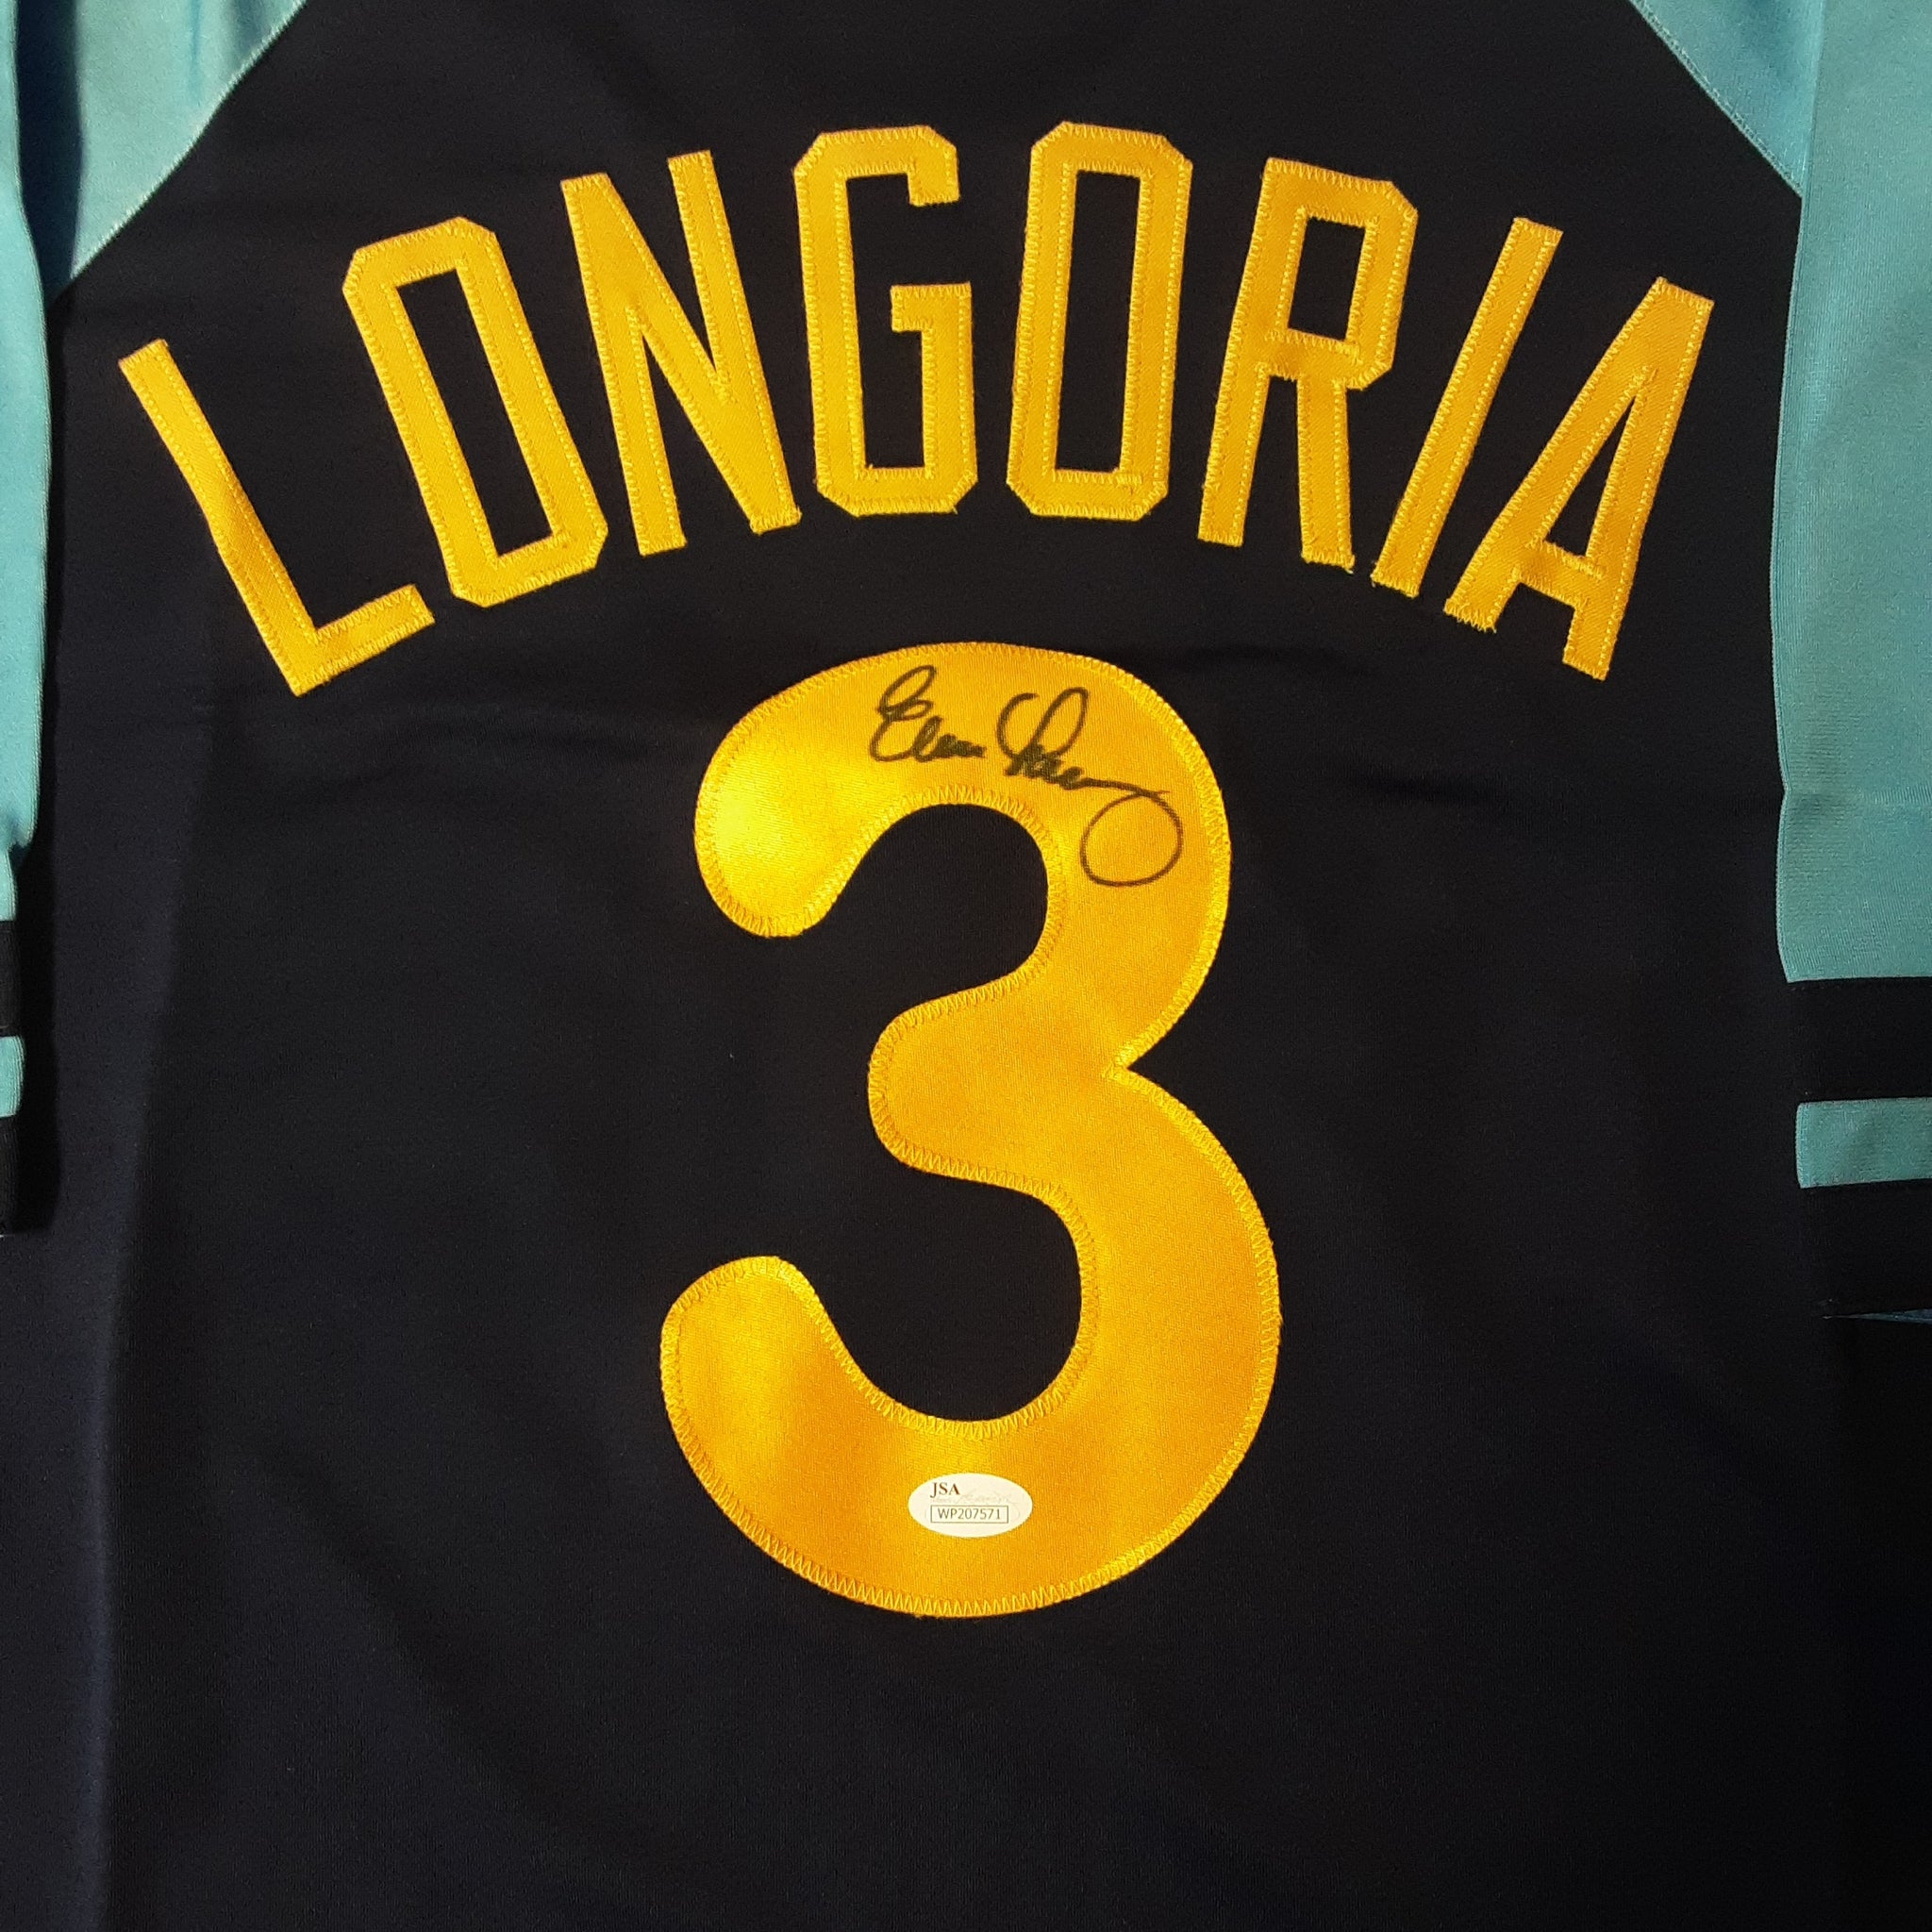 evan longoria signed jersey